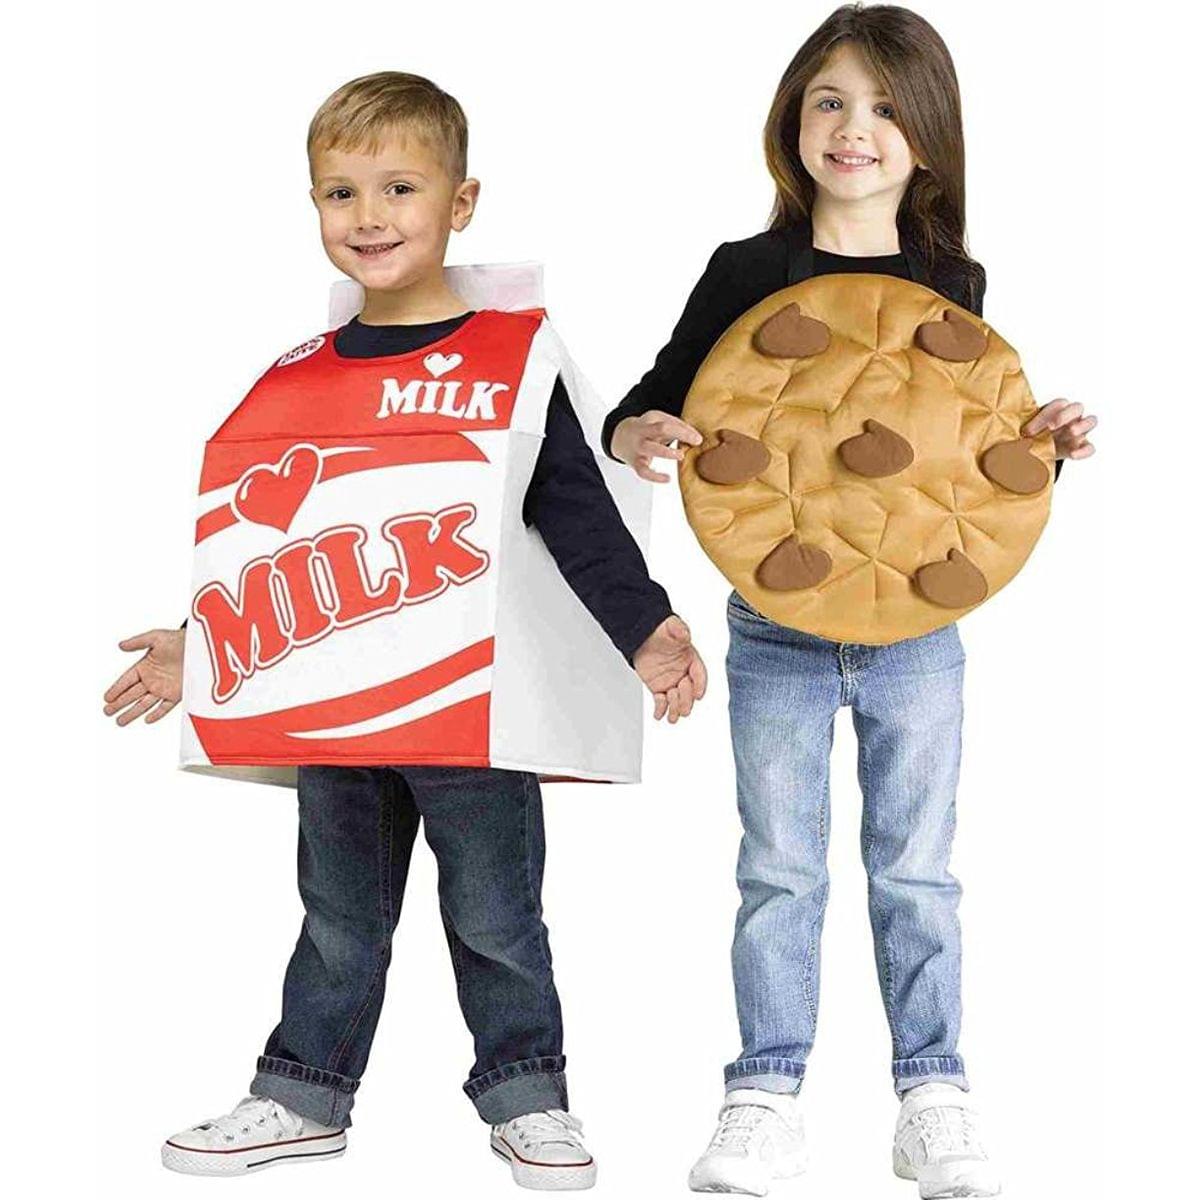 Cookies & Milk Toddler Costume 3T-4T